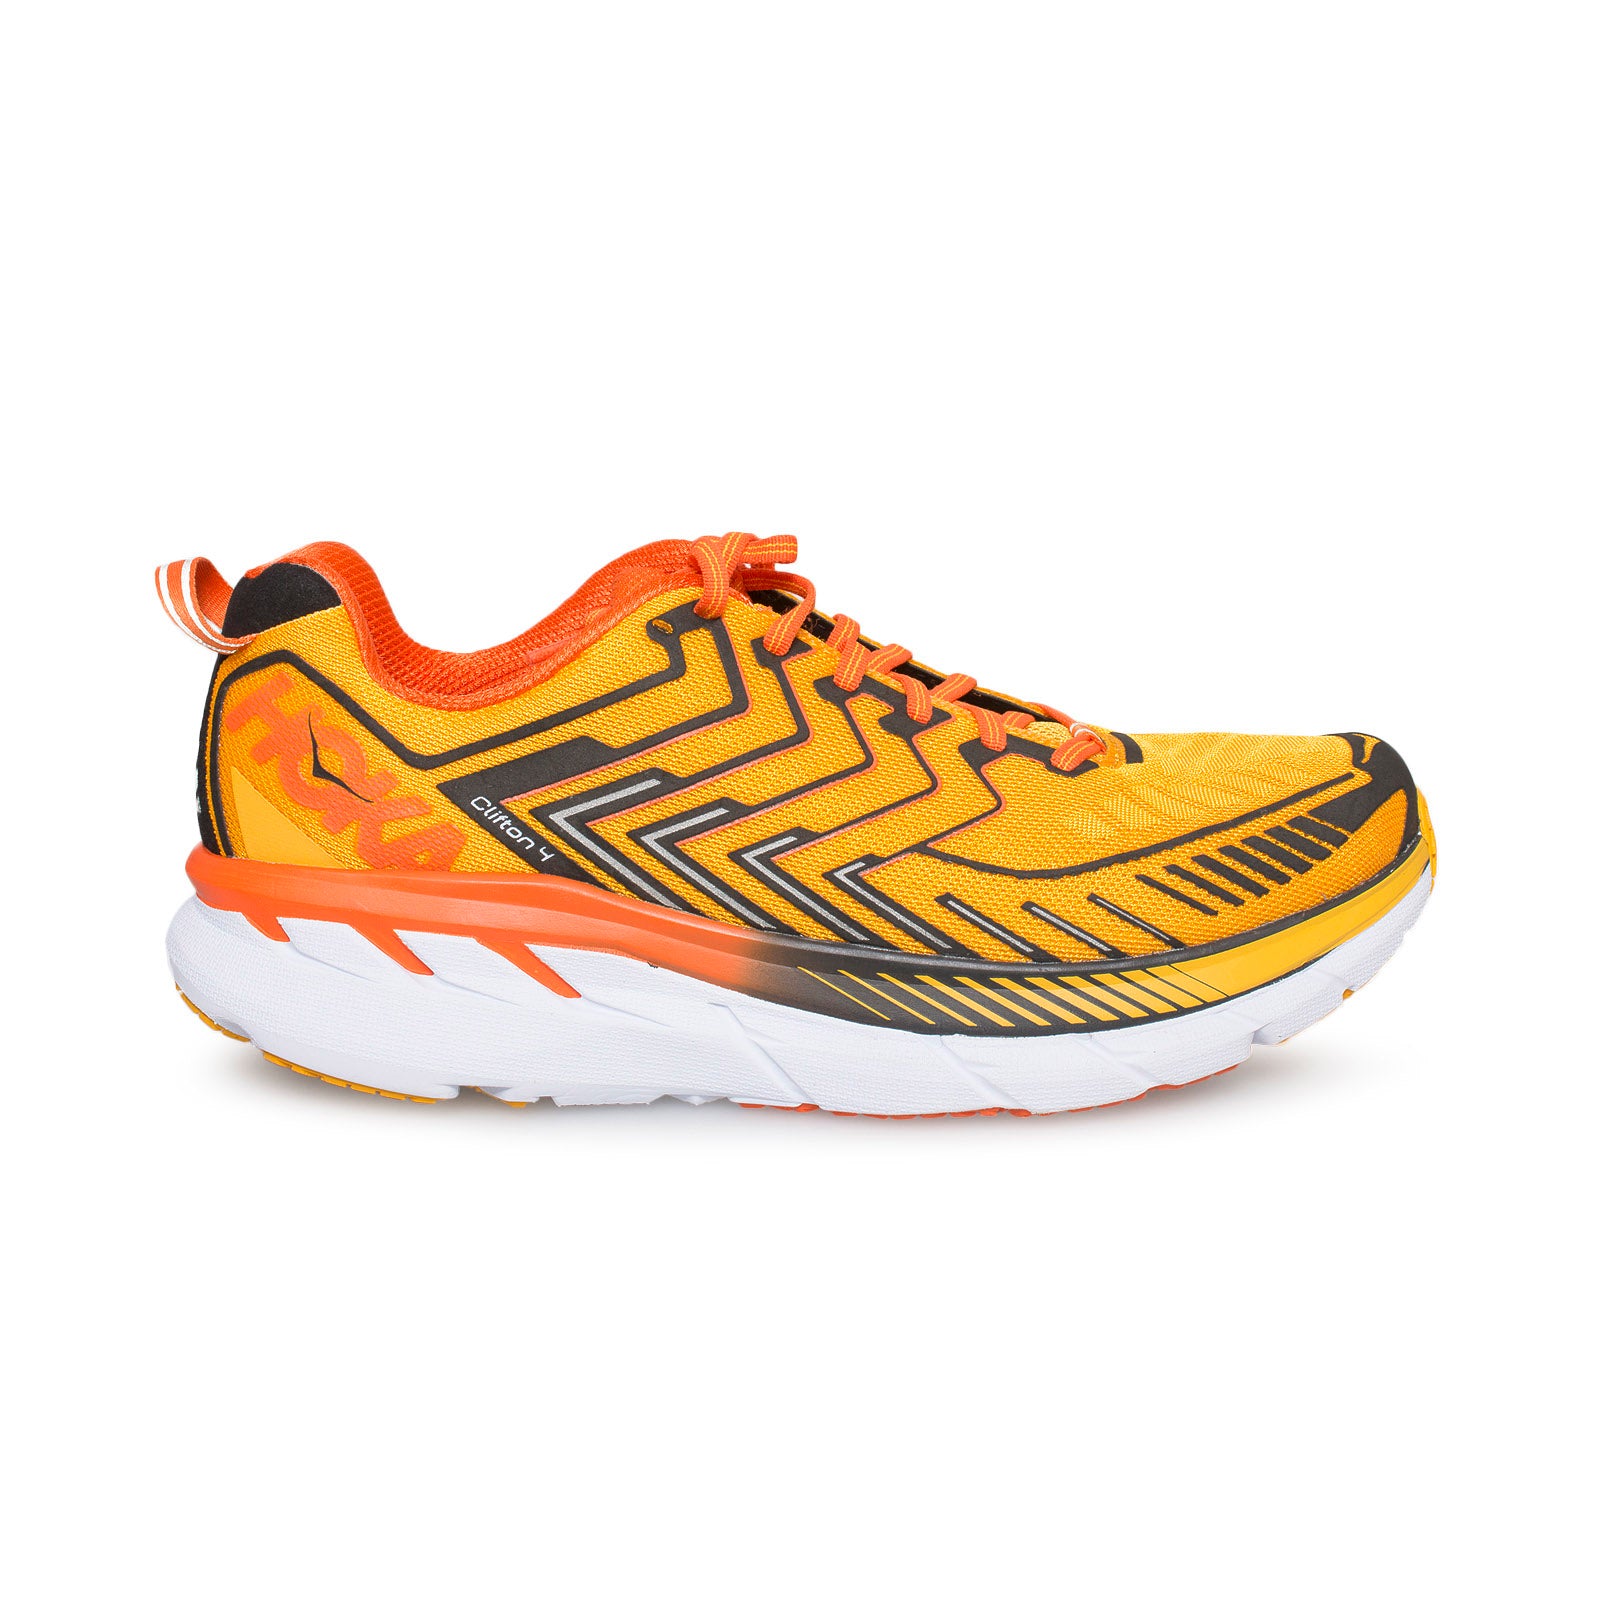 Hoka One One Clifton 4 Saffron / Red Orange Running Shoes - Men's ...